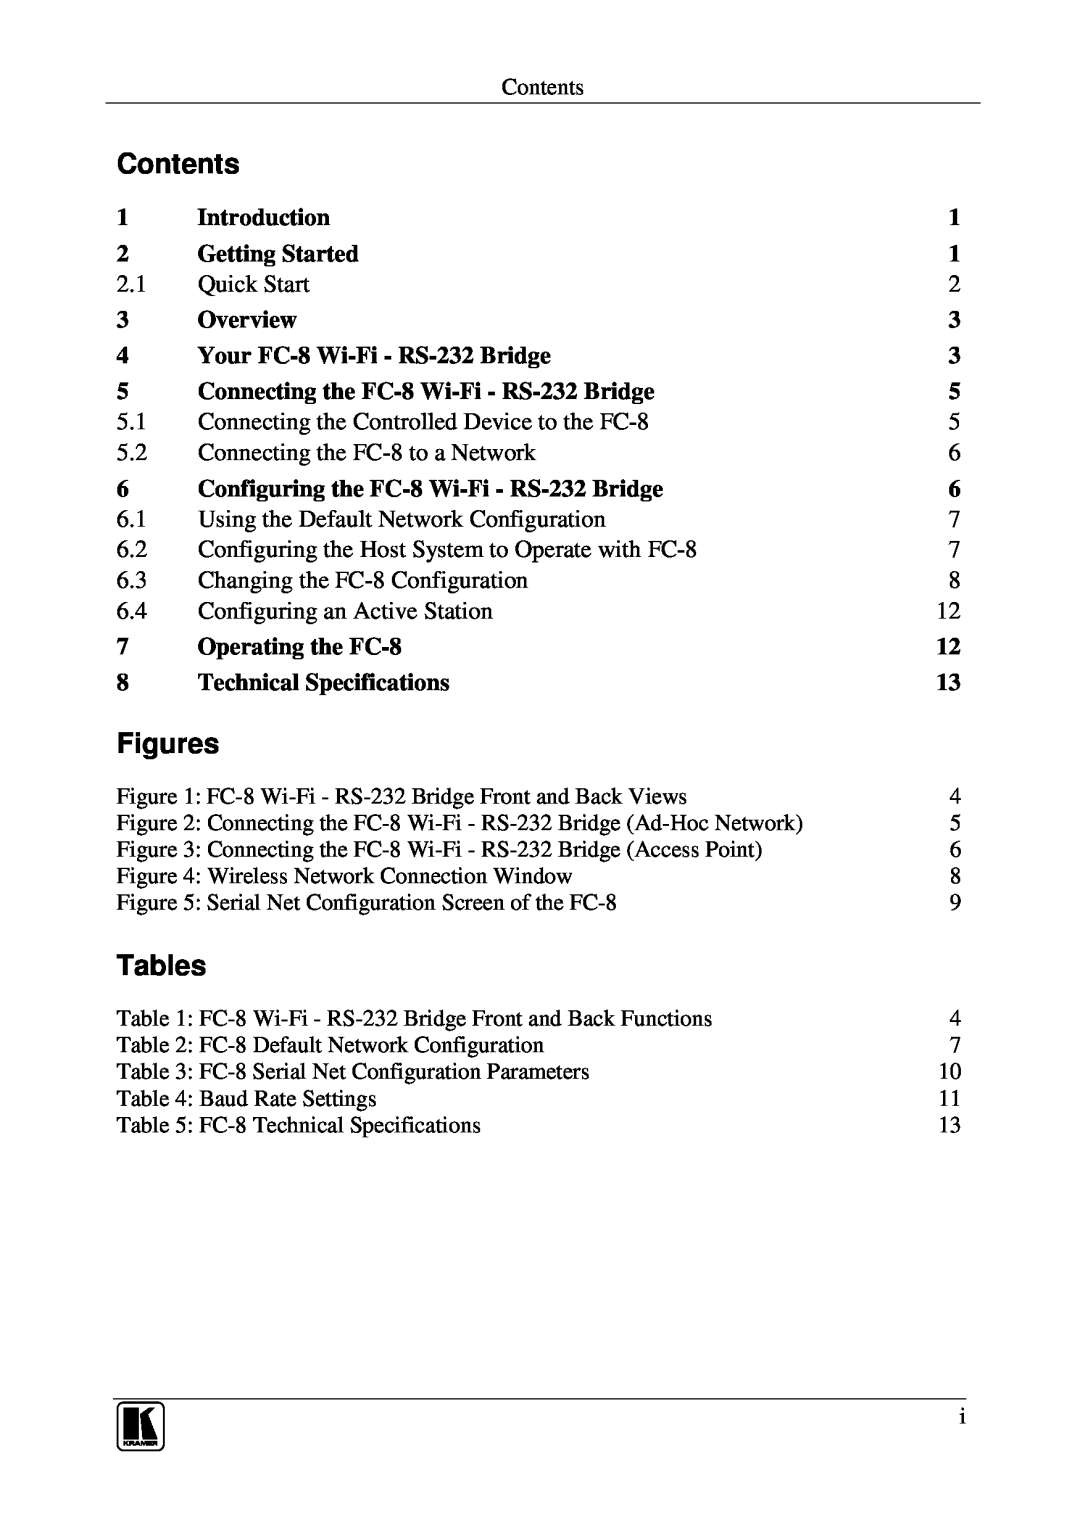 Kramer Electronics FC-8 user manual Contents, Figures, Tables 